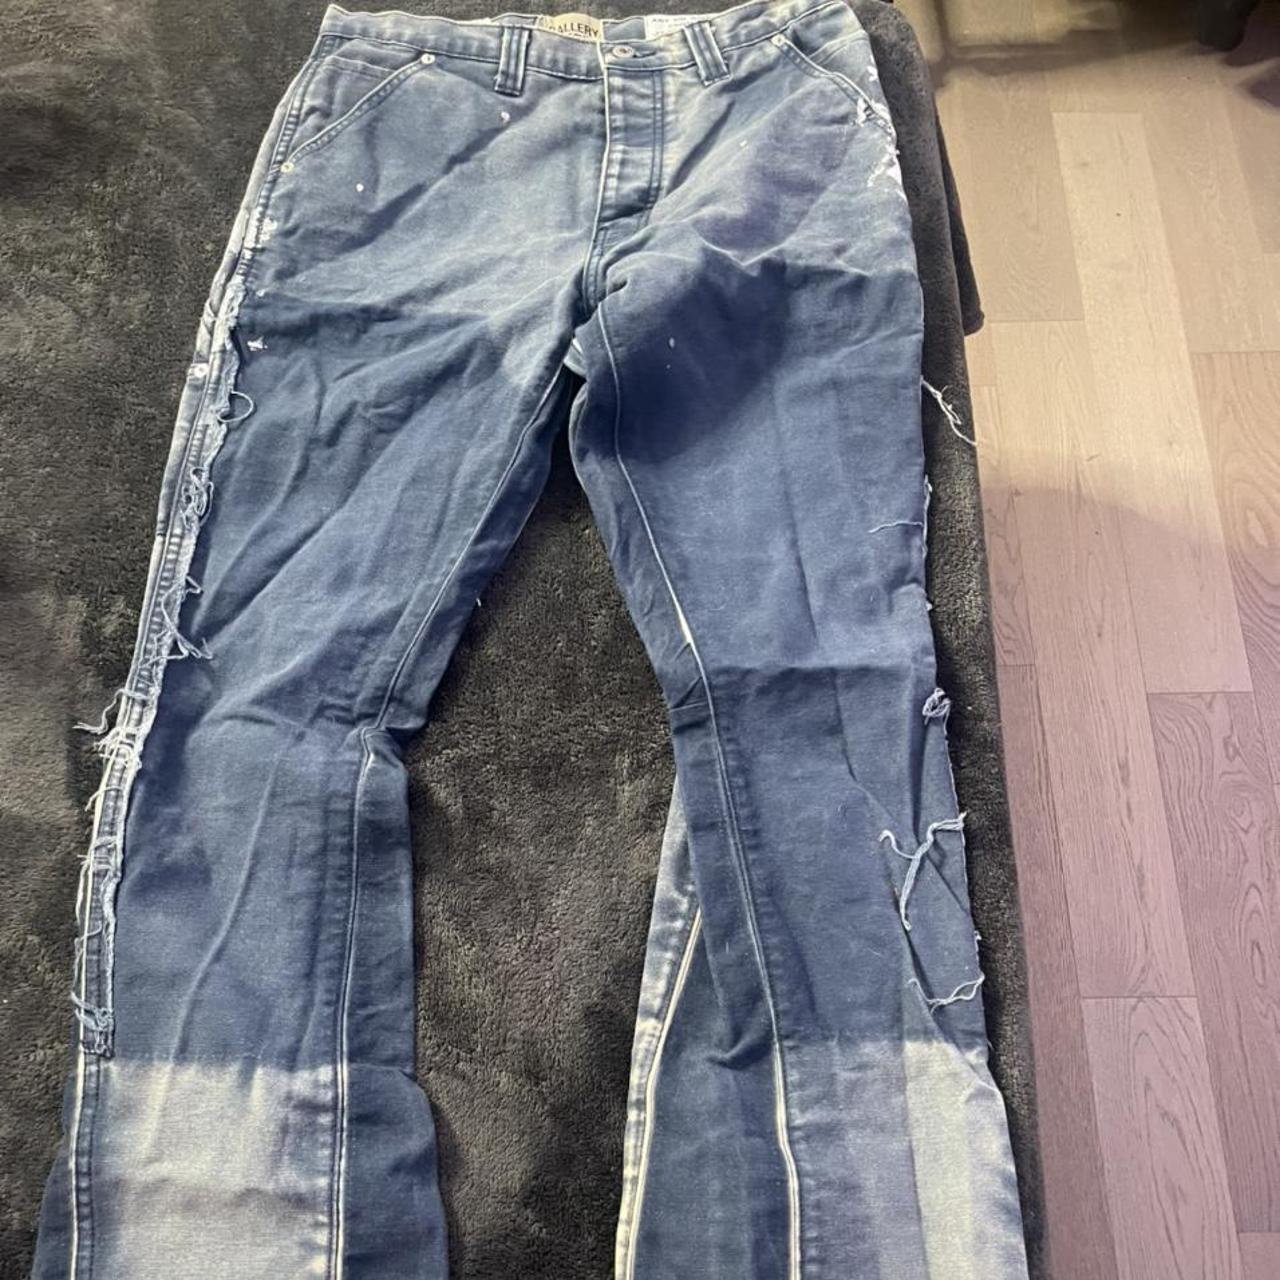 Gallery dept jeans worn 2 times - Depop